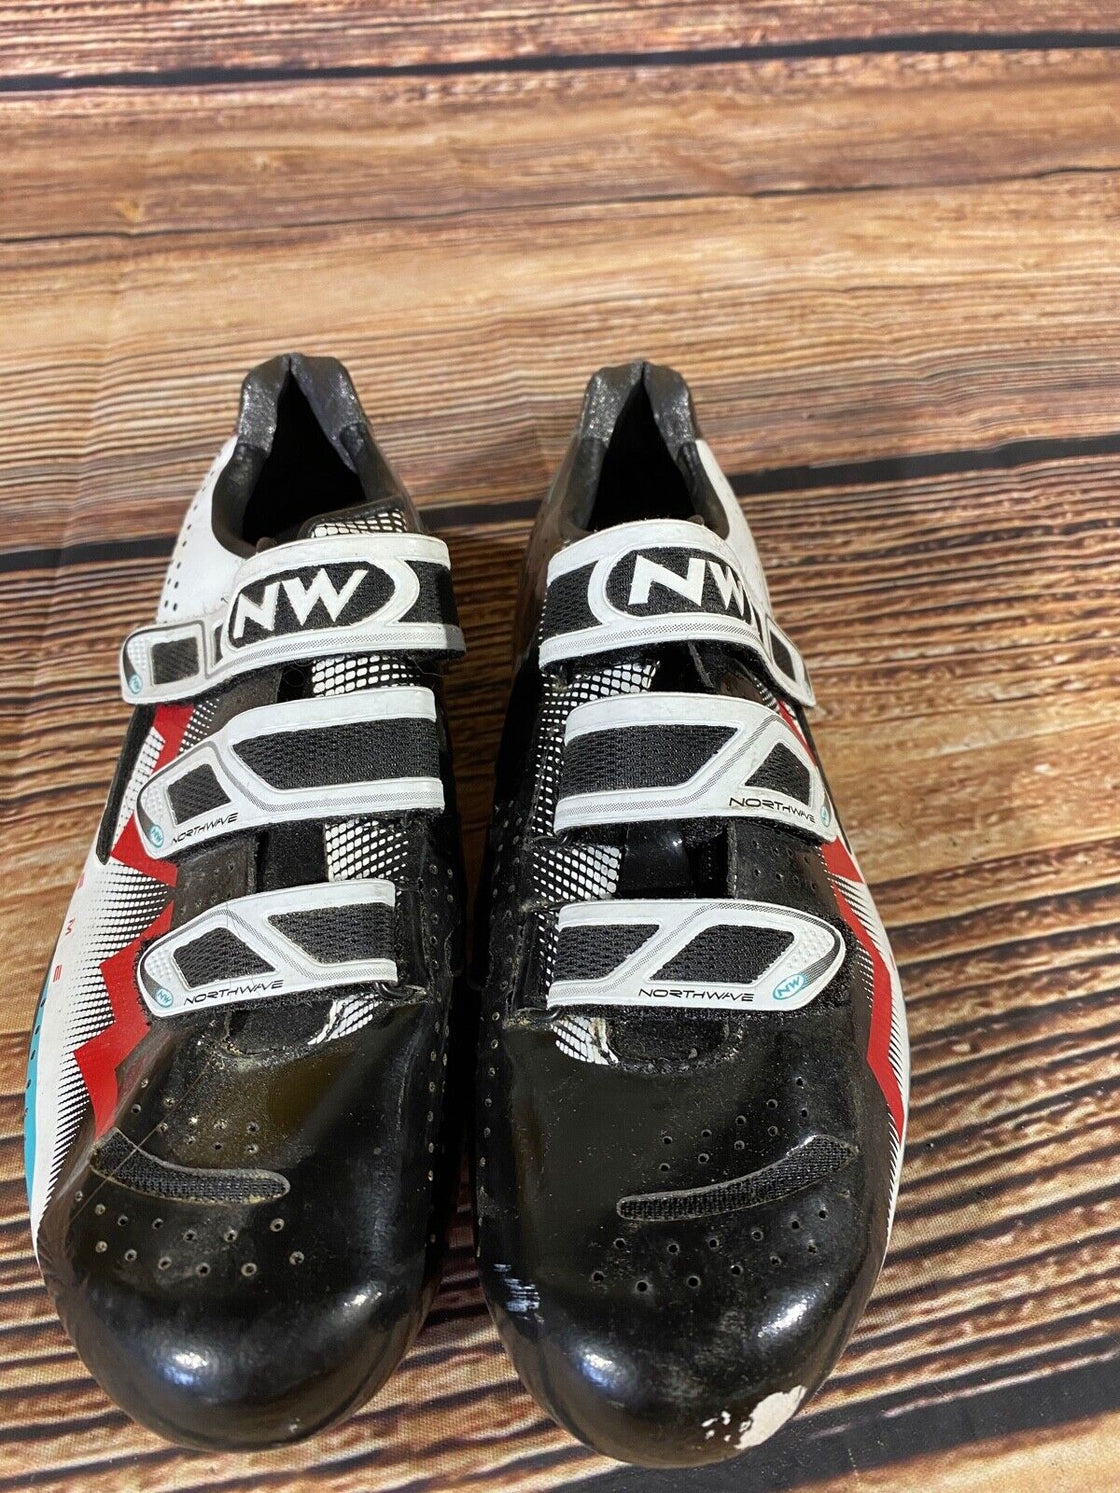 NORTHWAVE Extreme Road Cycling Shoes Biking Boots Size EU42.5, US10, Mondo 268